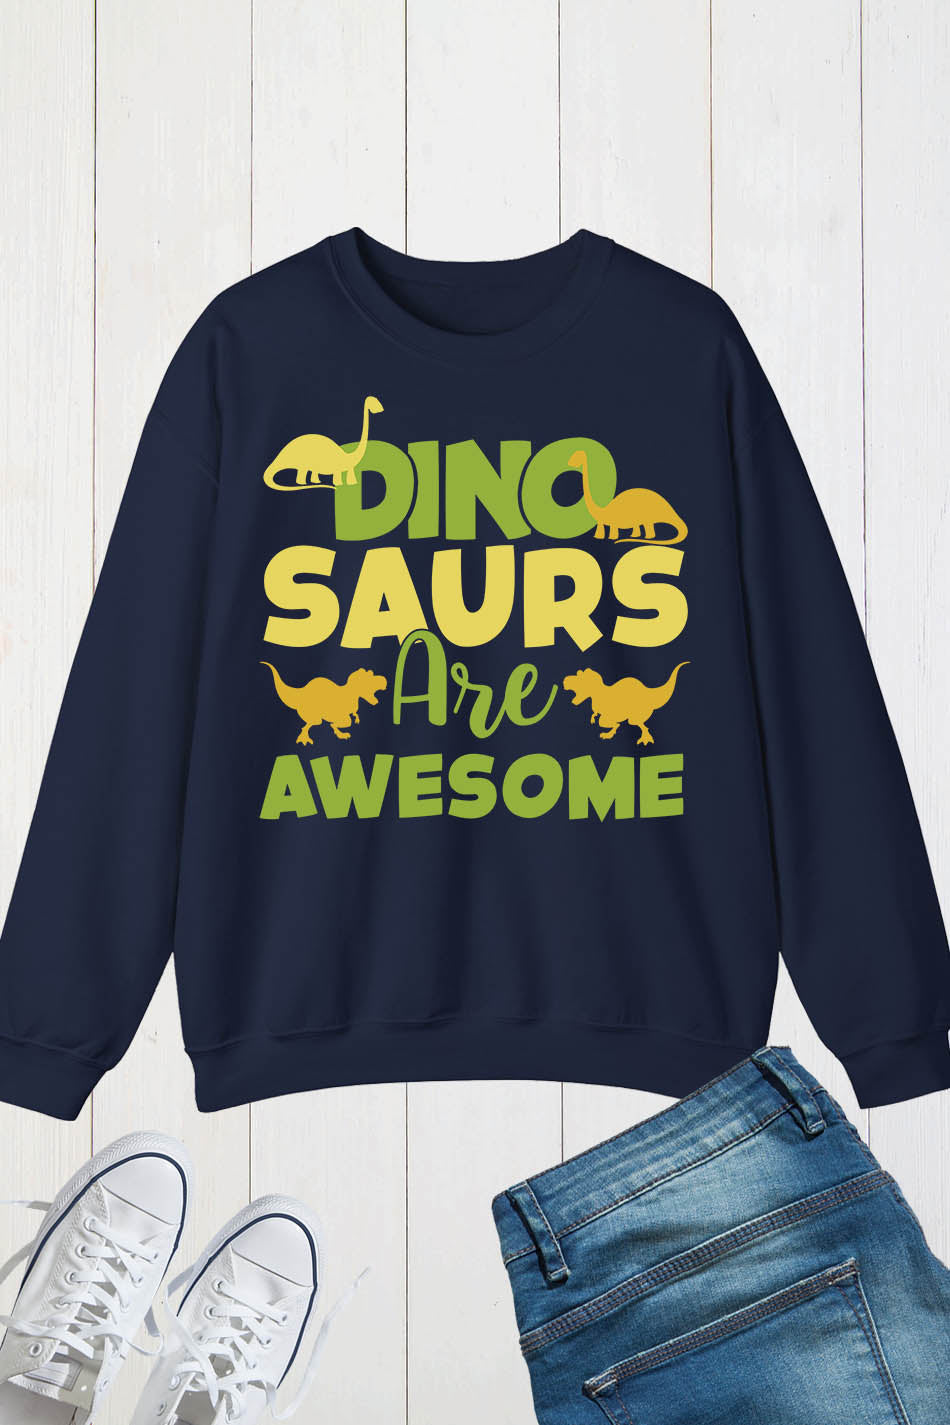 Dinosaur are Awesome Sweatshirt